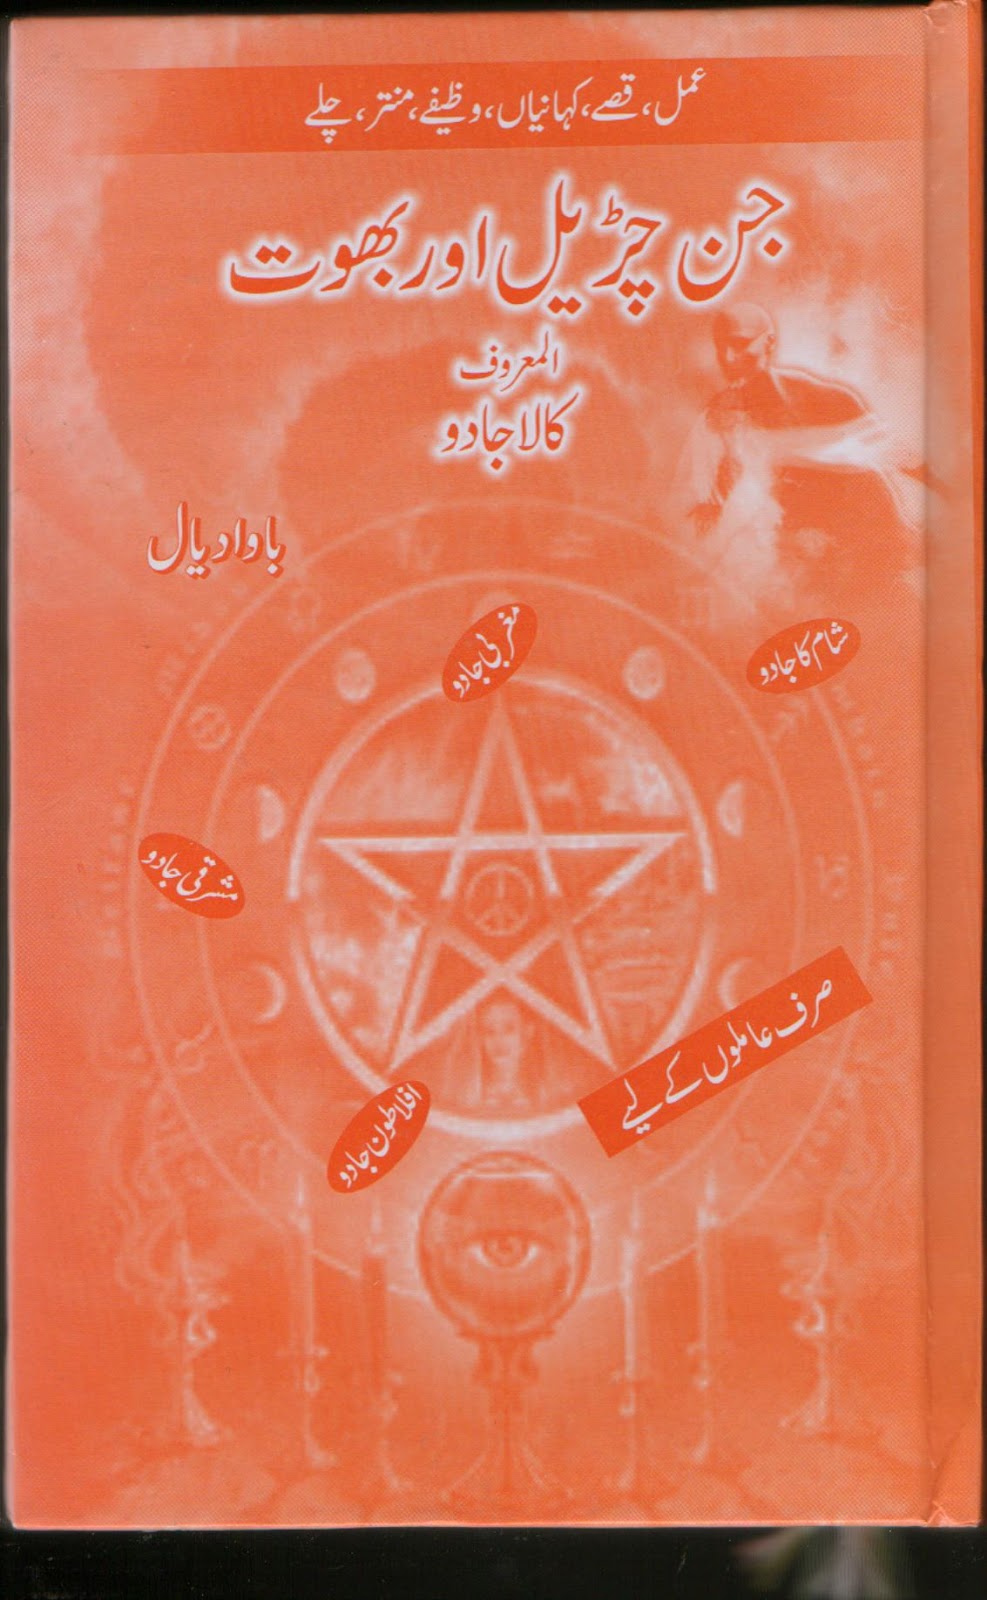 kala jadu |Taweez~ amliyat: black magic books